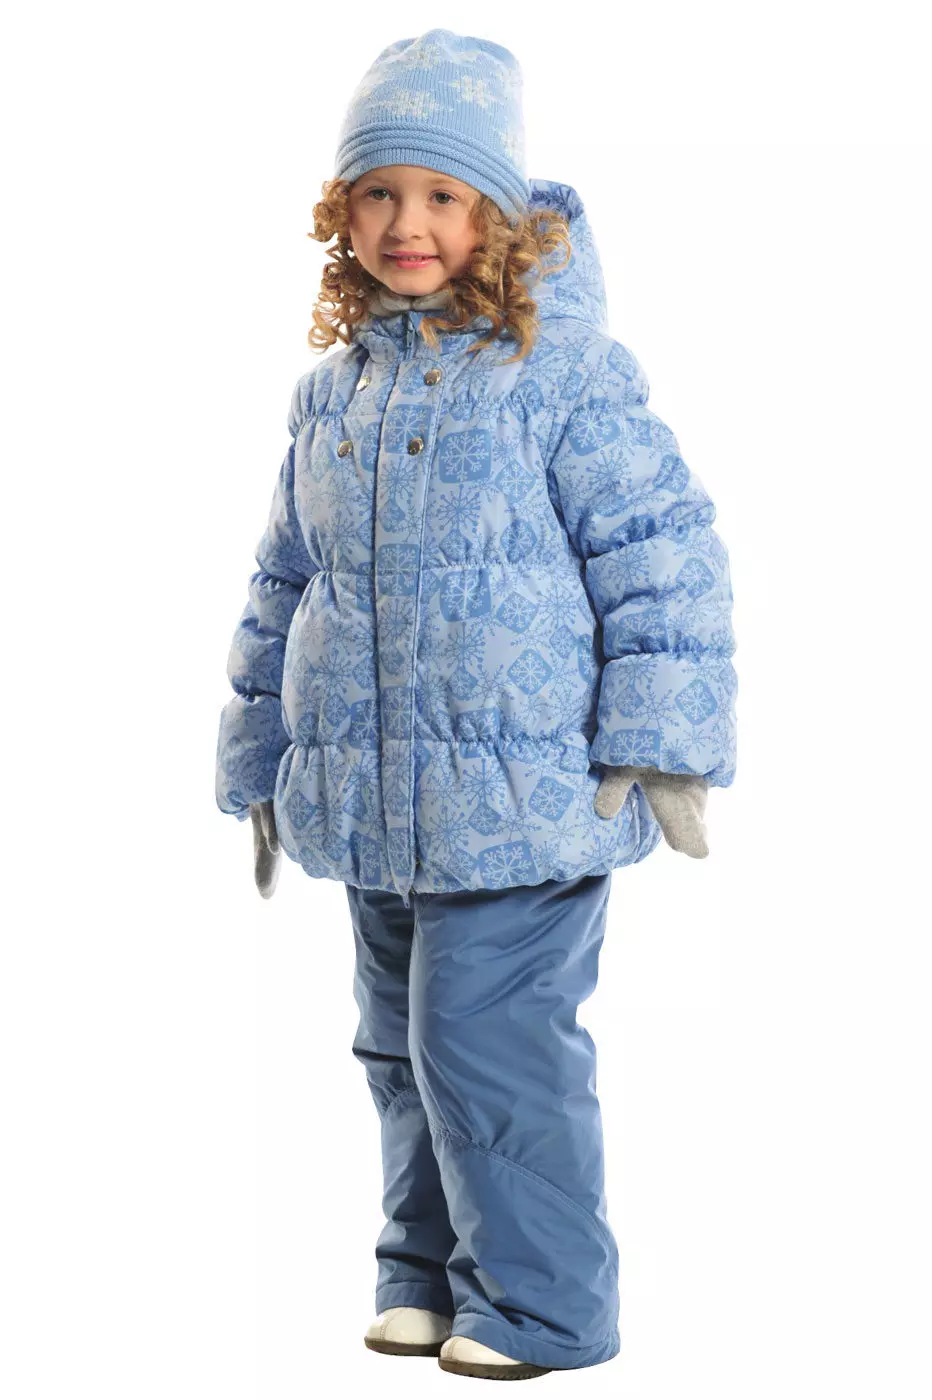 vestit d'hivern per a la noia (77 fotos): des Valianly, Kiko i Monkler, Gusti, la membrana calenta, finlandès de Reim, aïllat 13286_41